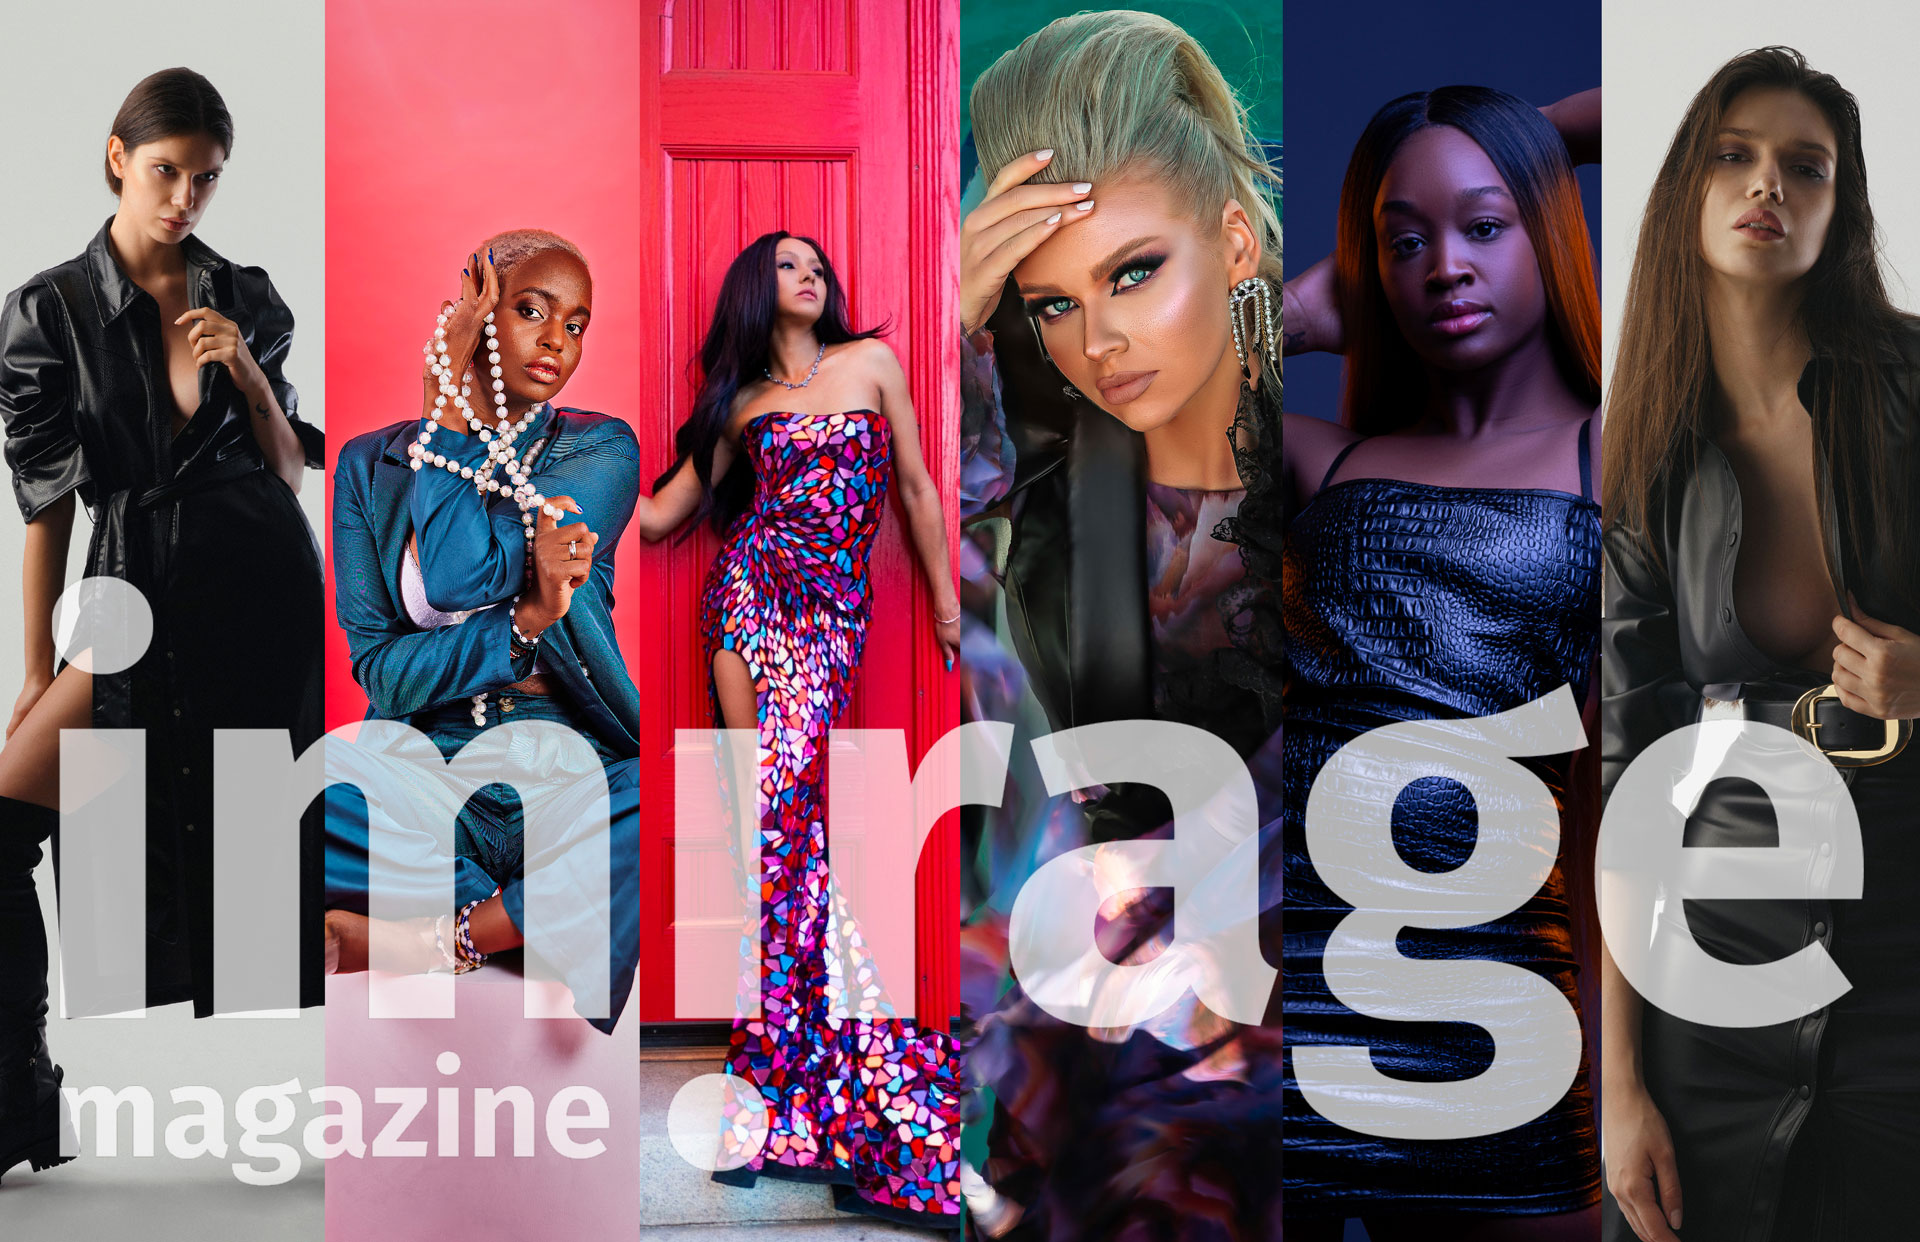 Imirage Magazine Colors of Style